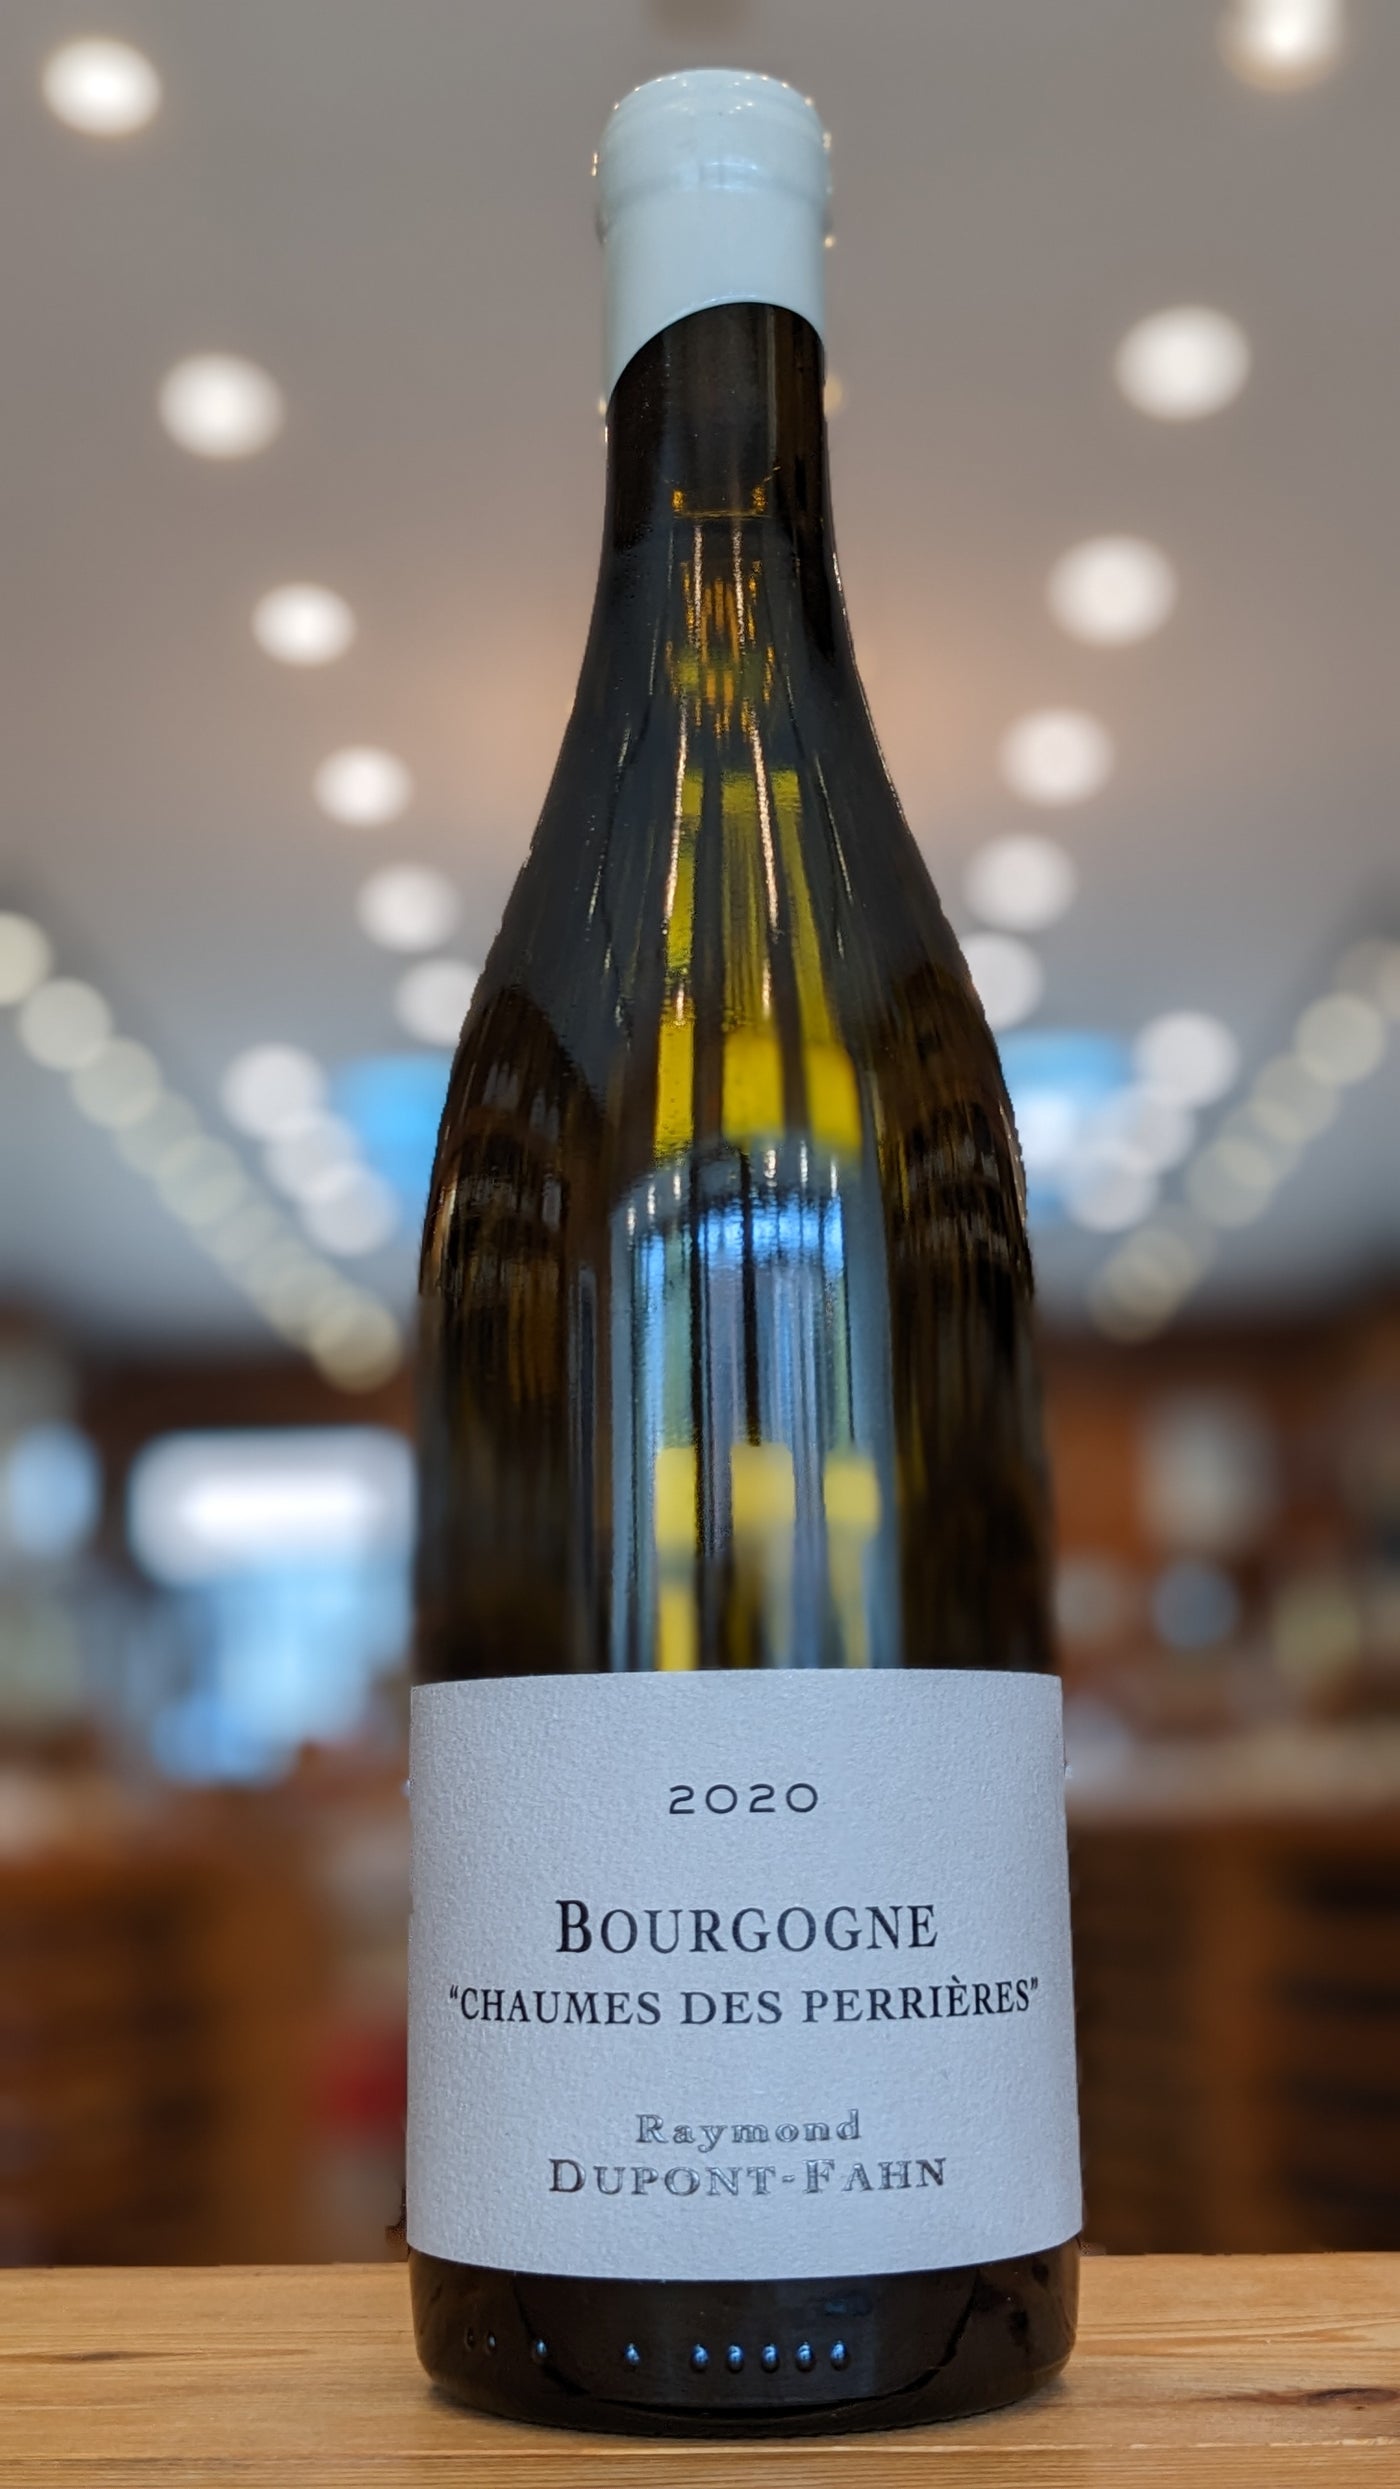 Domaine Dupont Fahn Bourgogne Chaumes Des Perrieres 2020